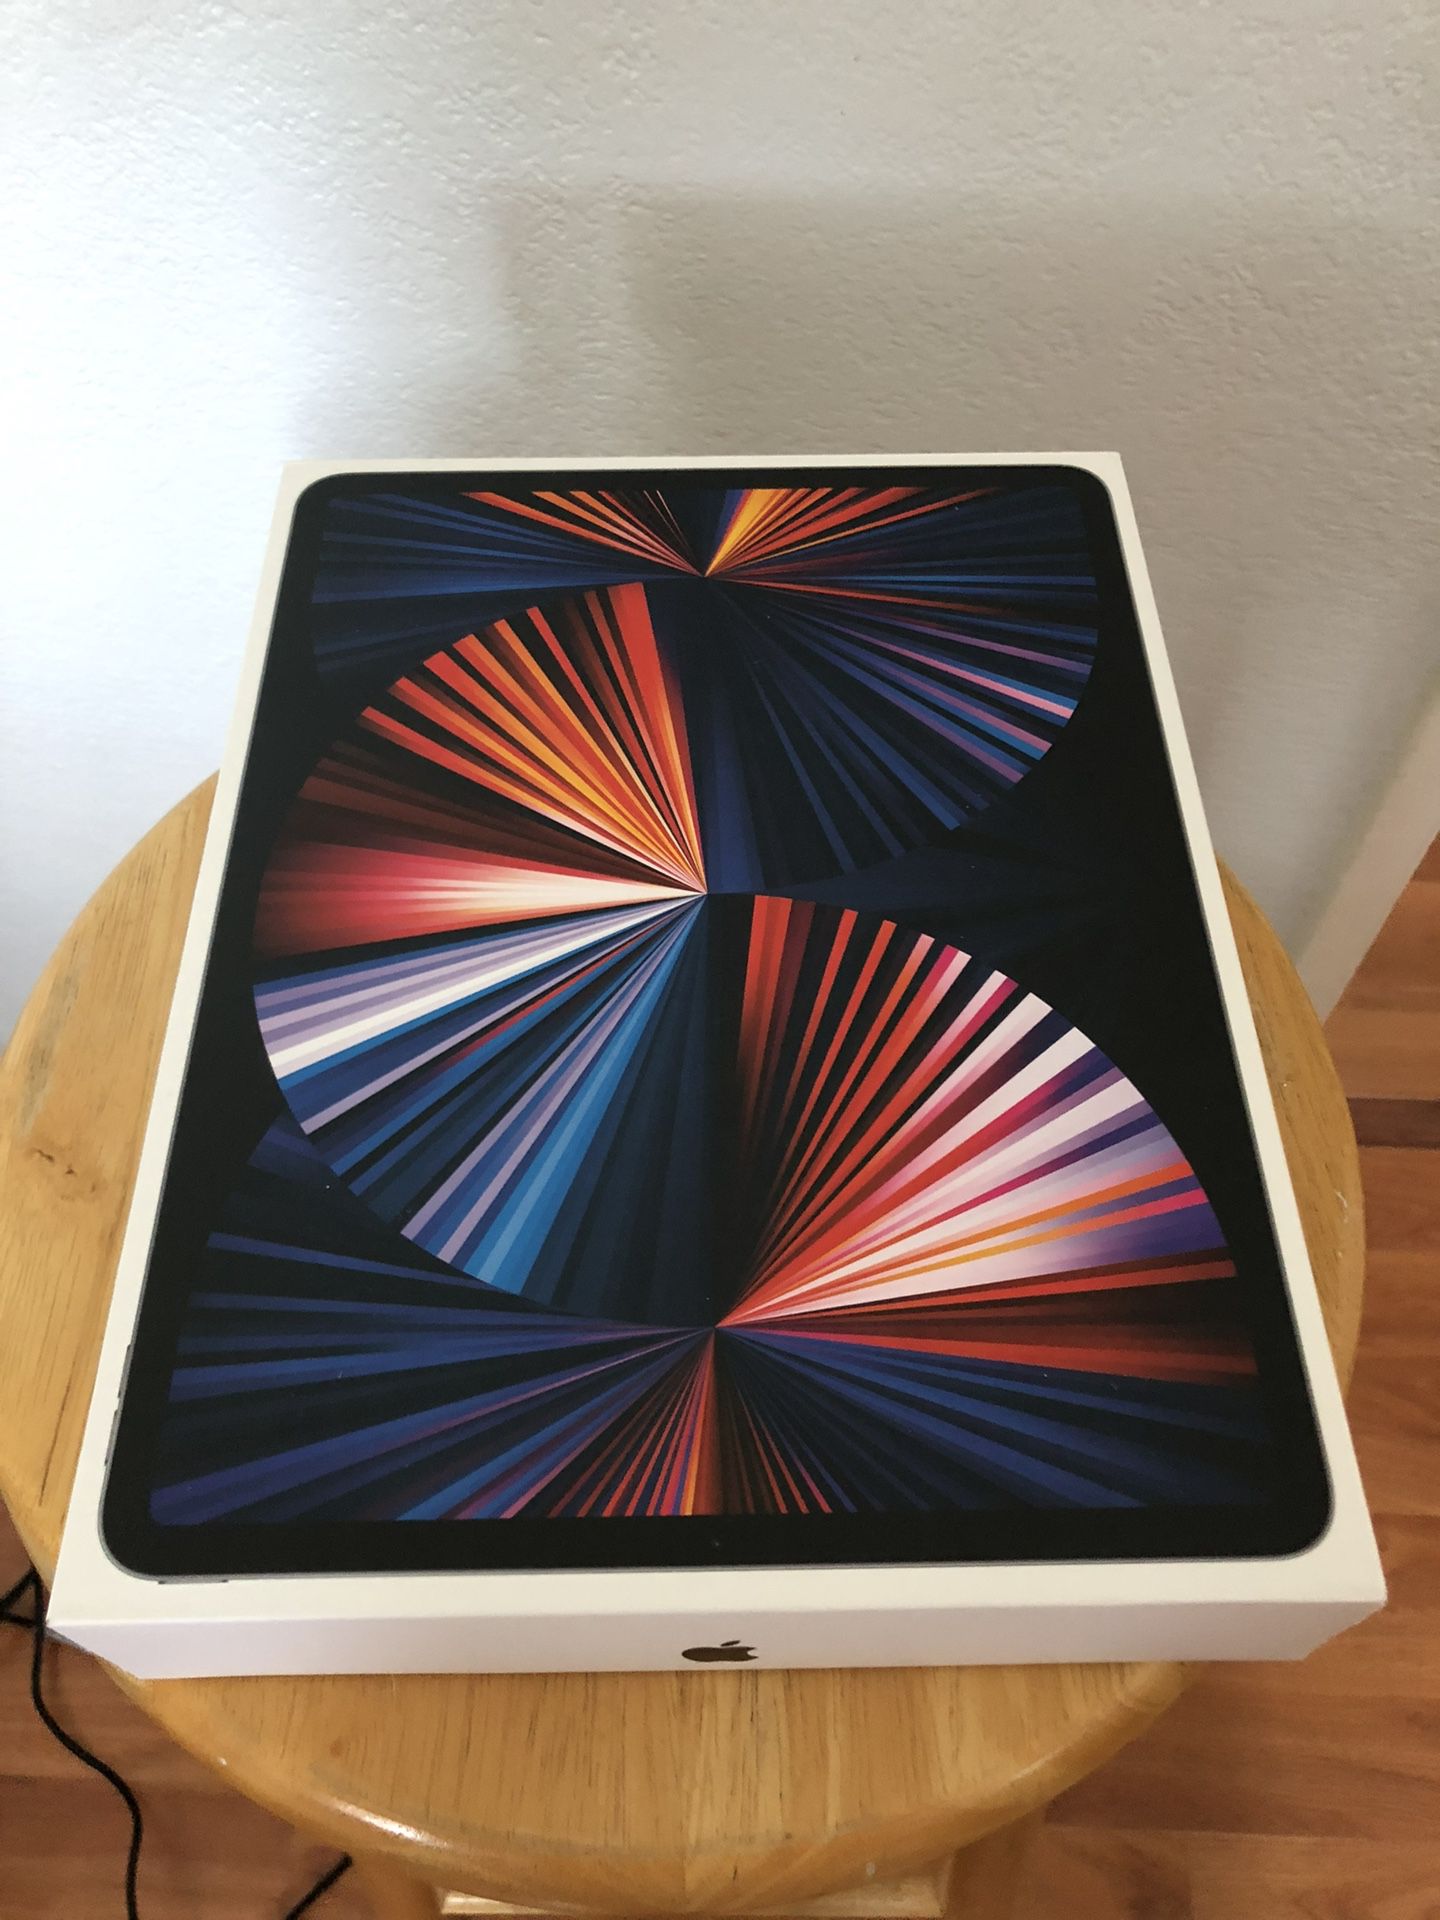 iPad Pro 5th Gen 12.9 in- Space Gray